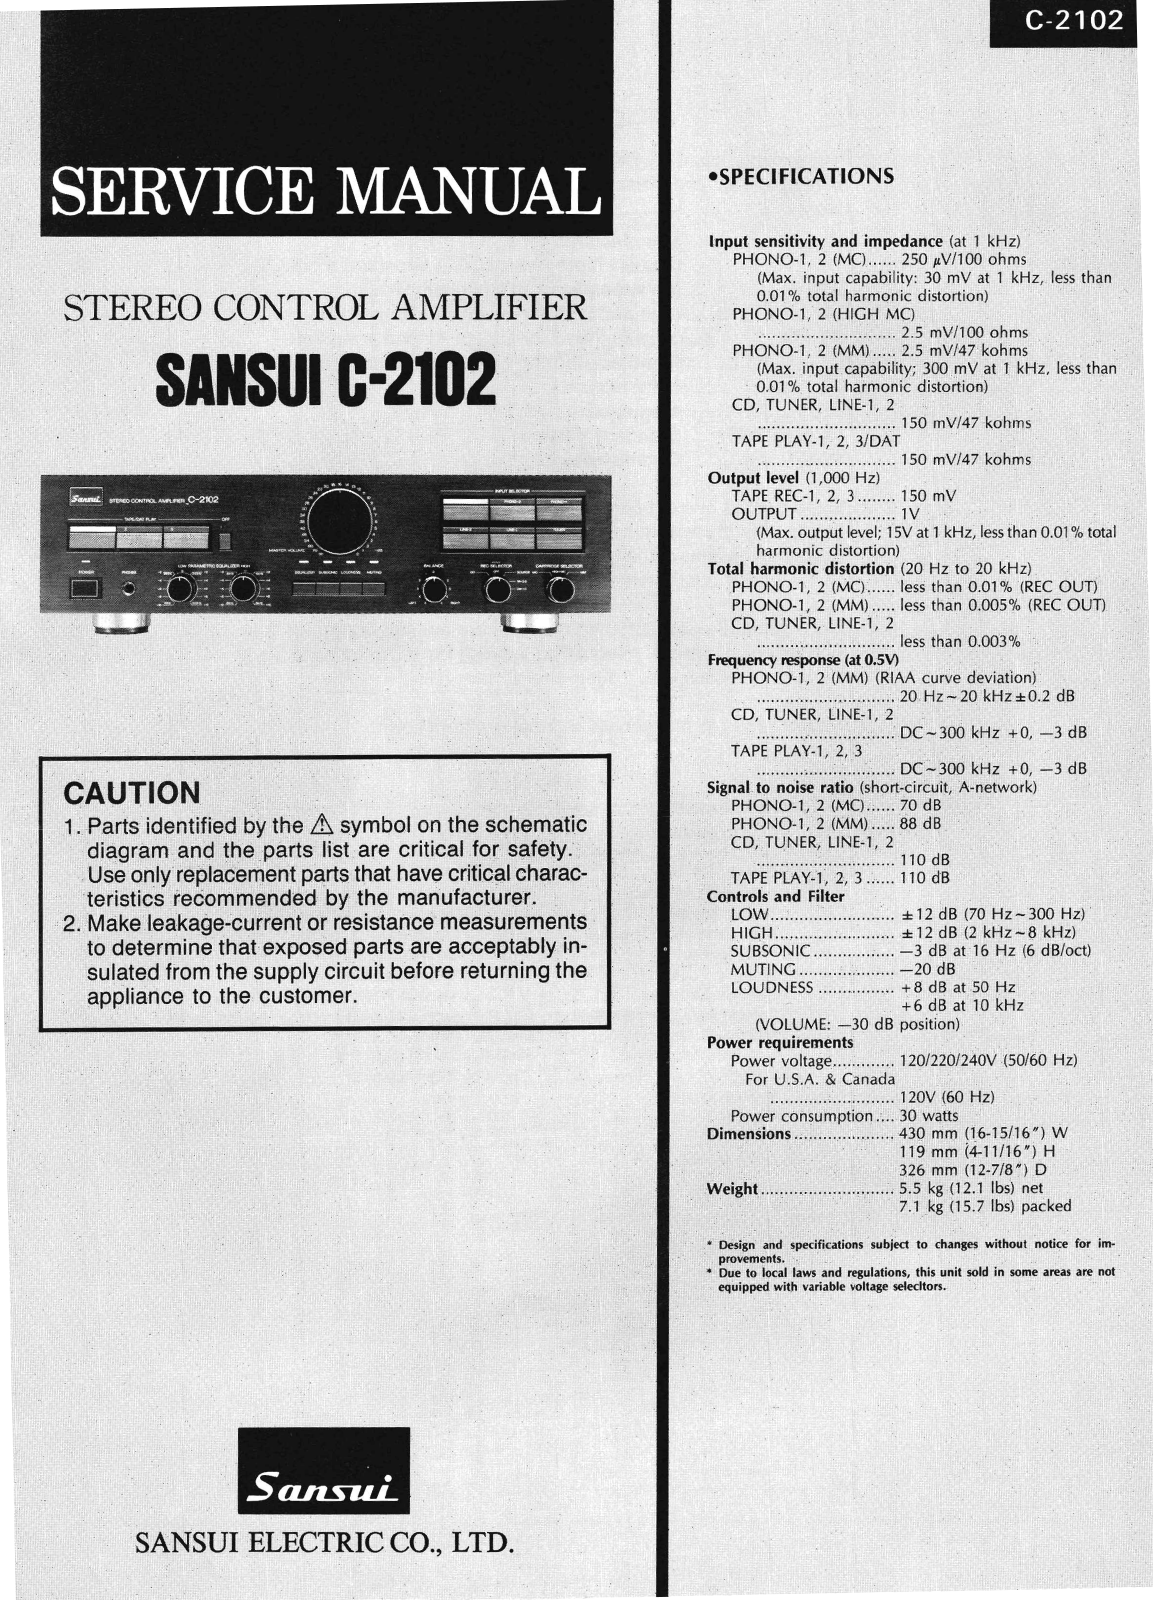 Sansui C-2102 Service Manual